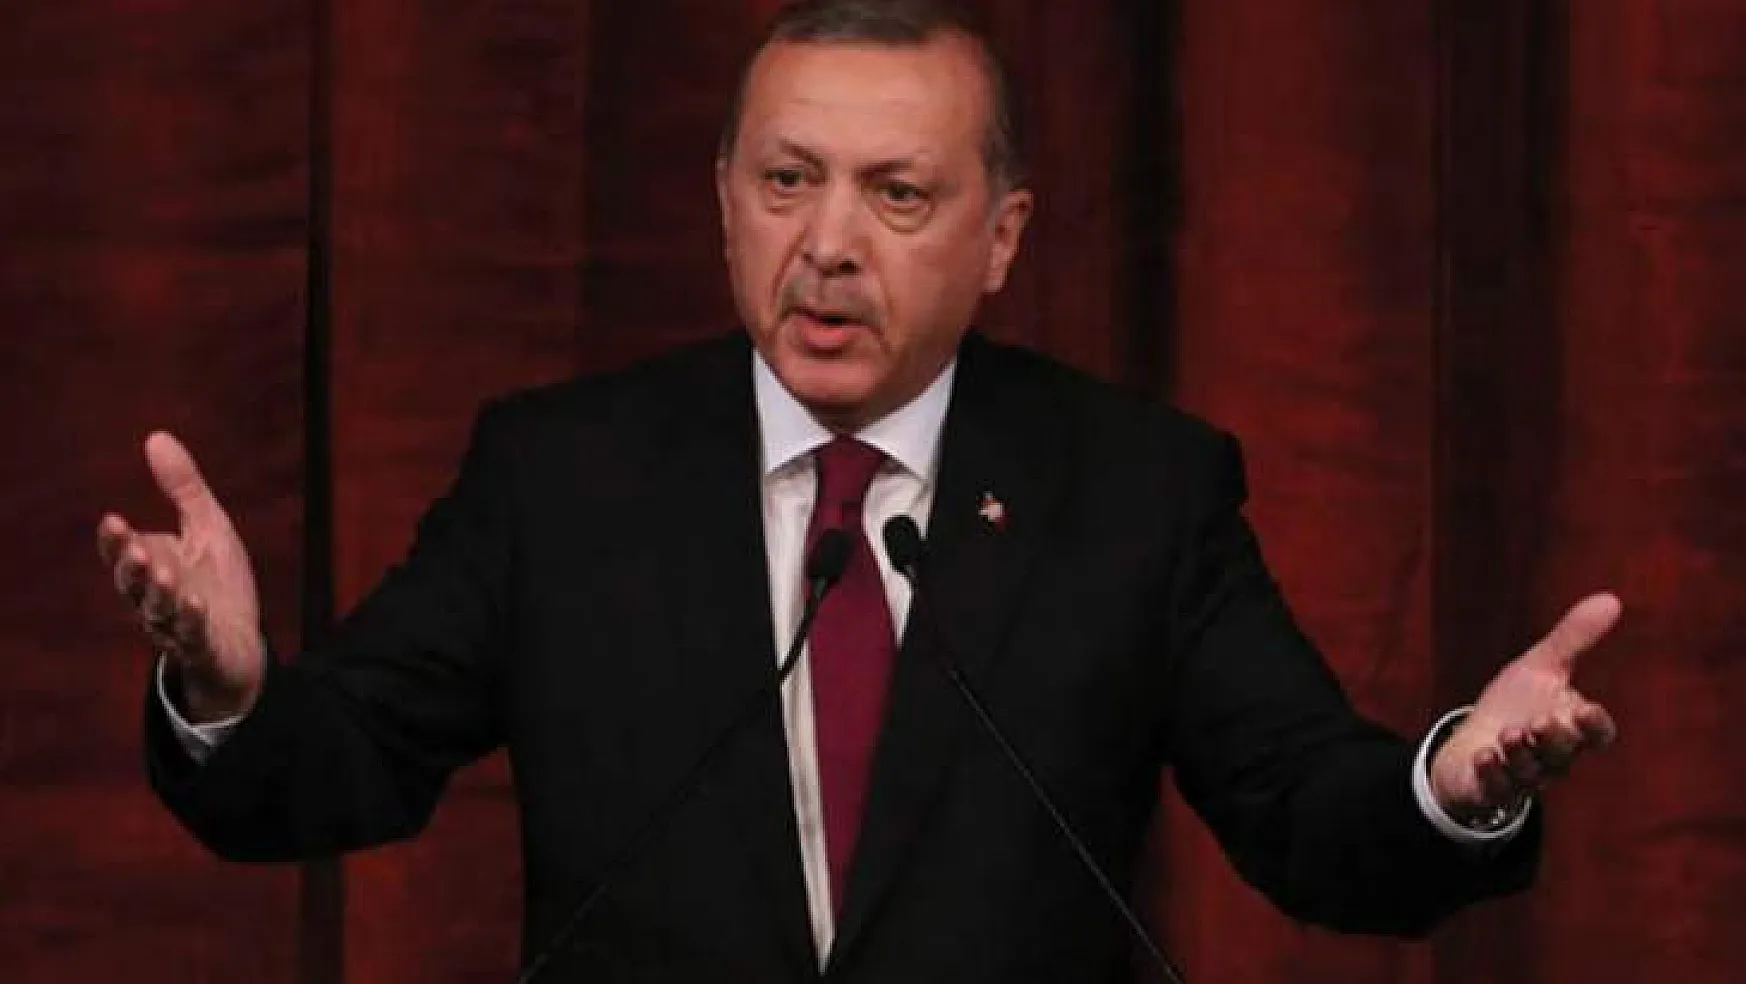 Cumhurbaşkanı Erdoğan'a hakarete 14 ay hapis